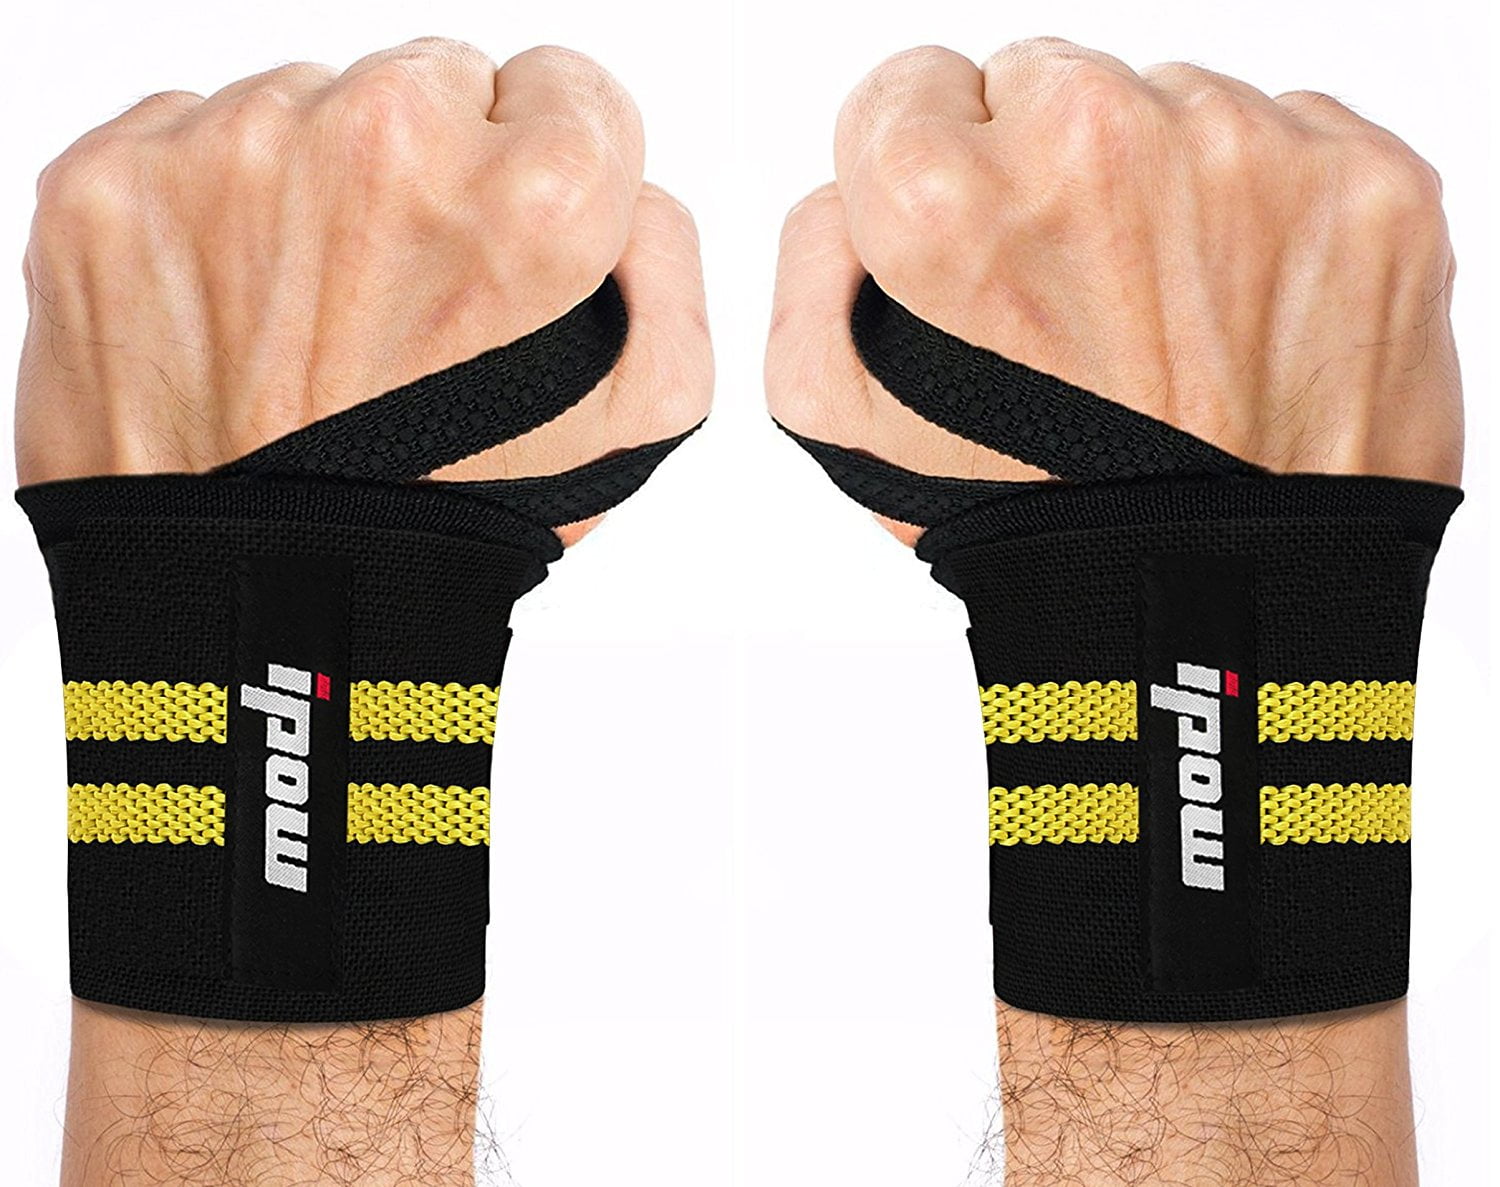 Wrist Support Weight Lifting Gym Training Brace Straps Wraps 2pcs Wristbands 